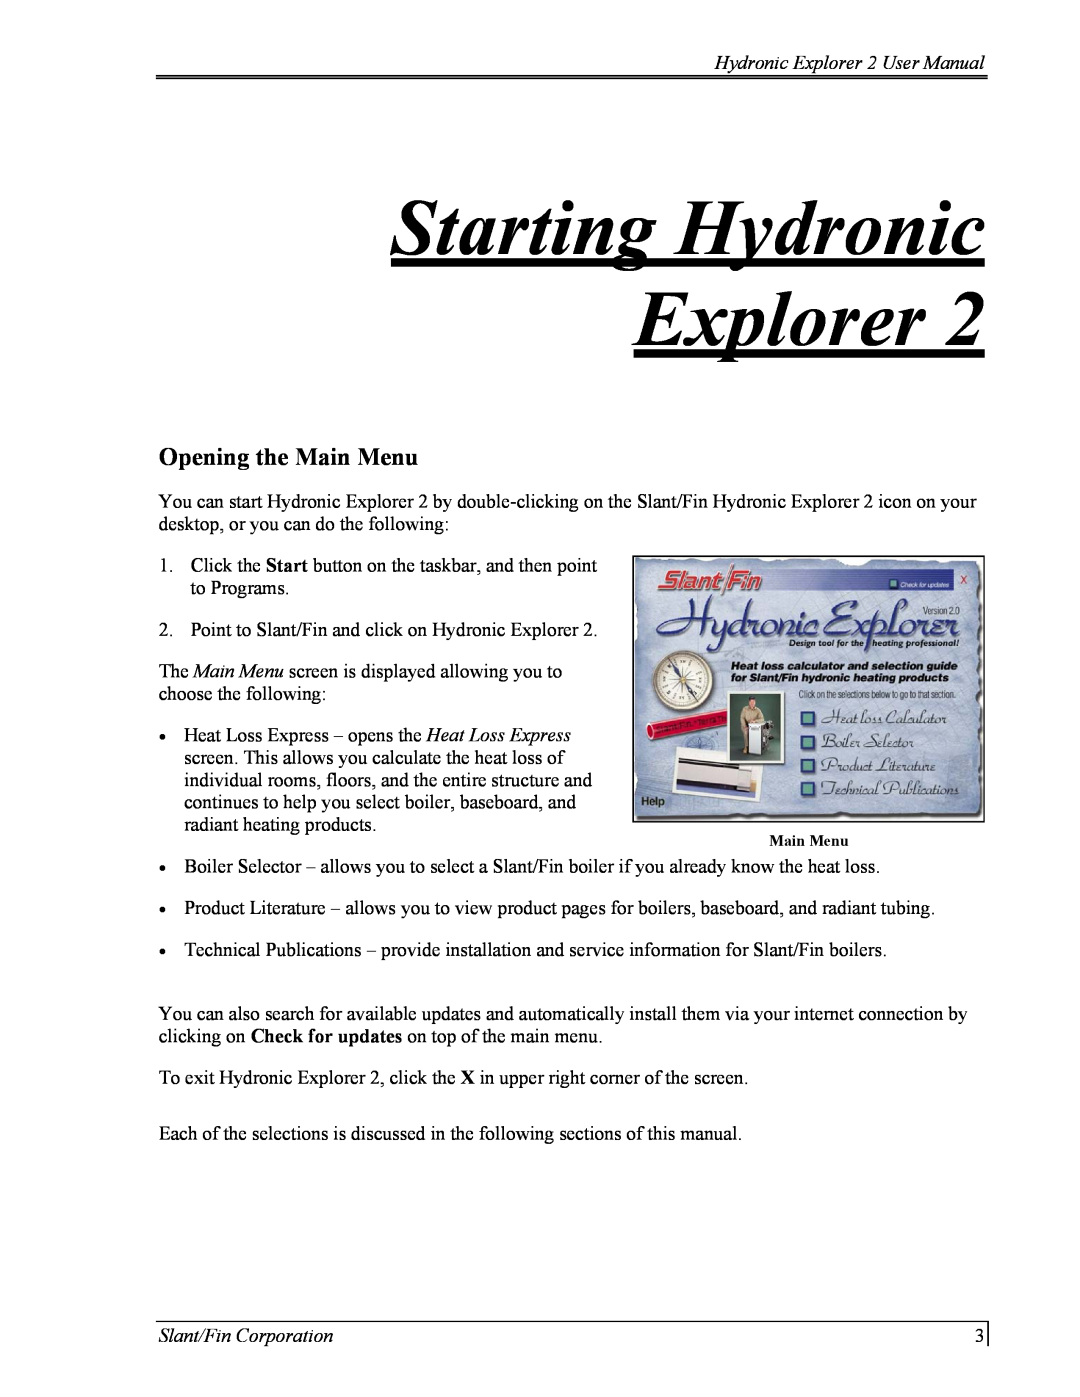 Slant/Fin Hydronic Explorer 2 user manual Starting Hydronic Explorer, Opening the Main Menu, Slant/Fin Corporation 